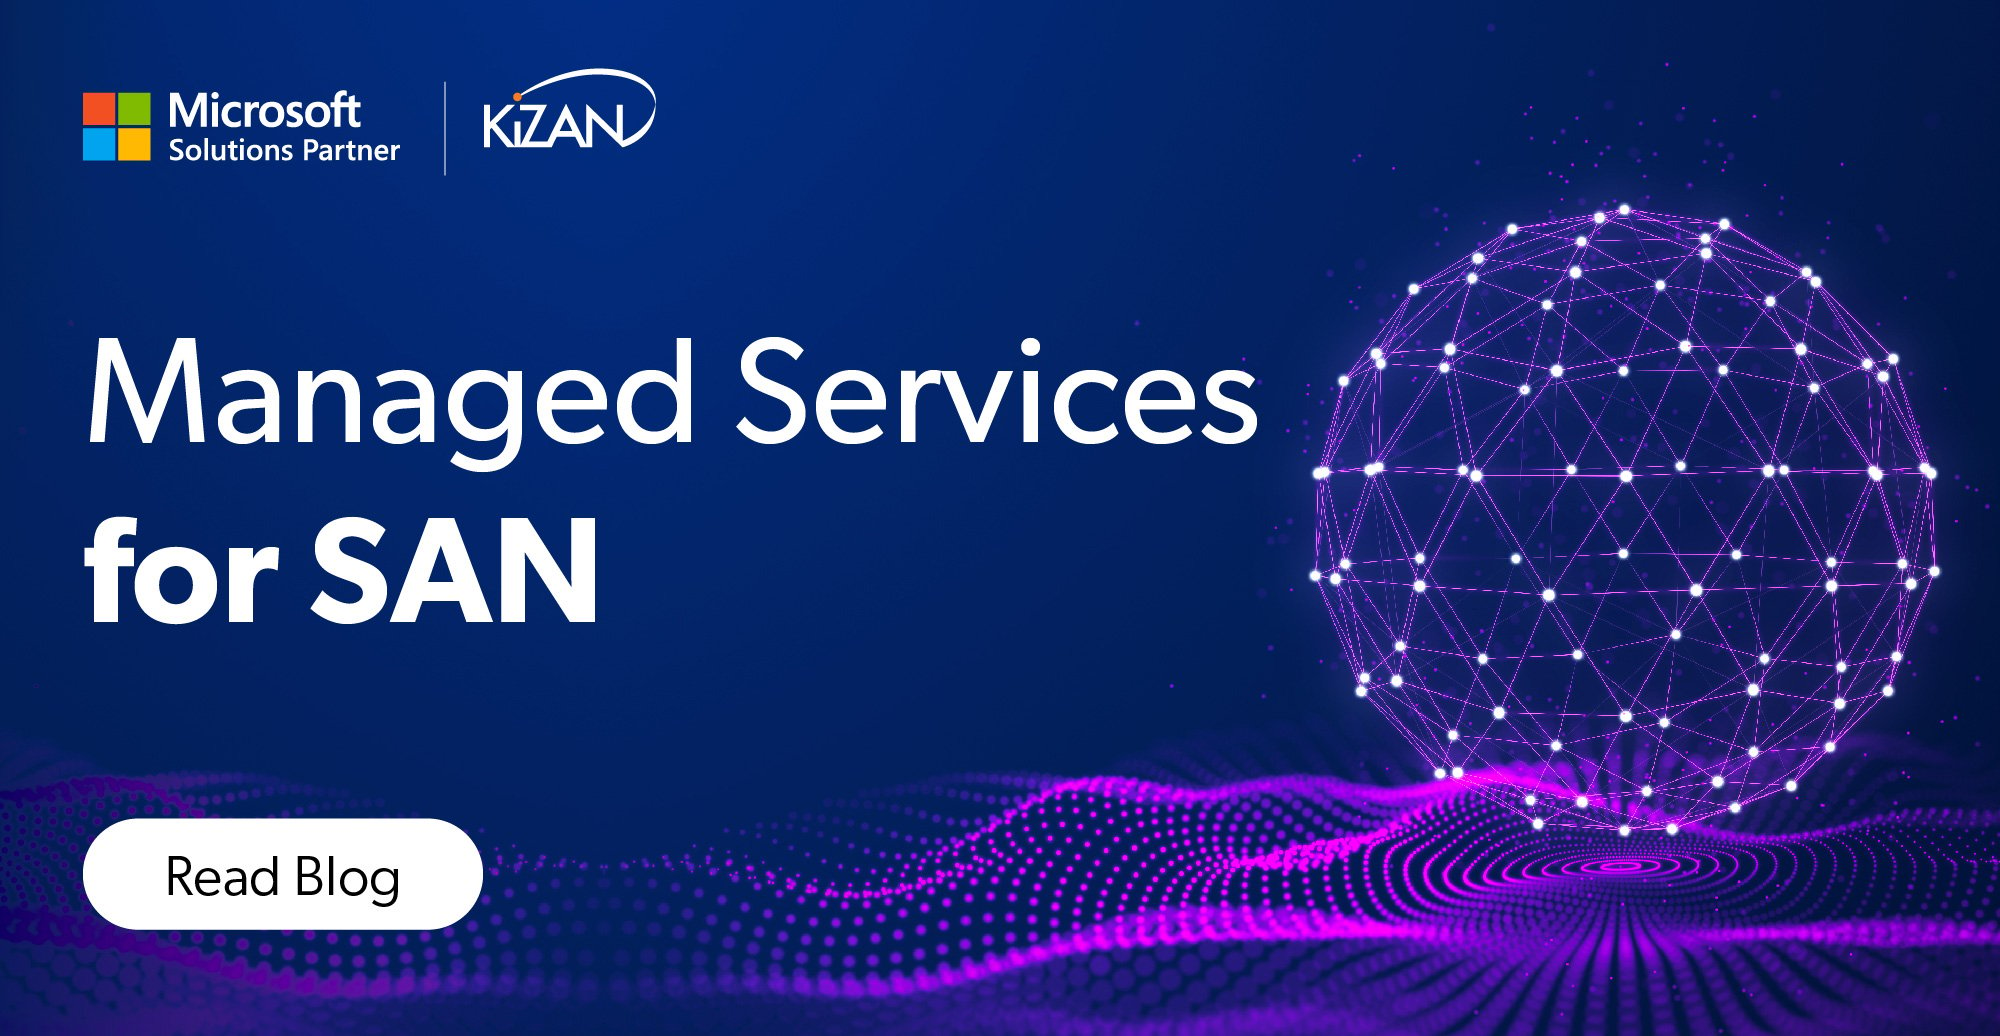 KiZAN Managed Services for SAN